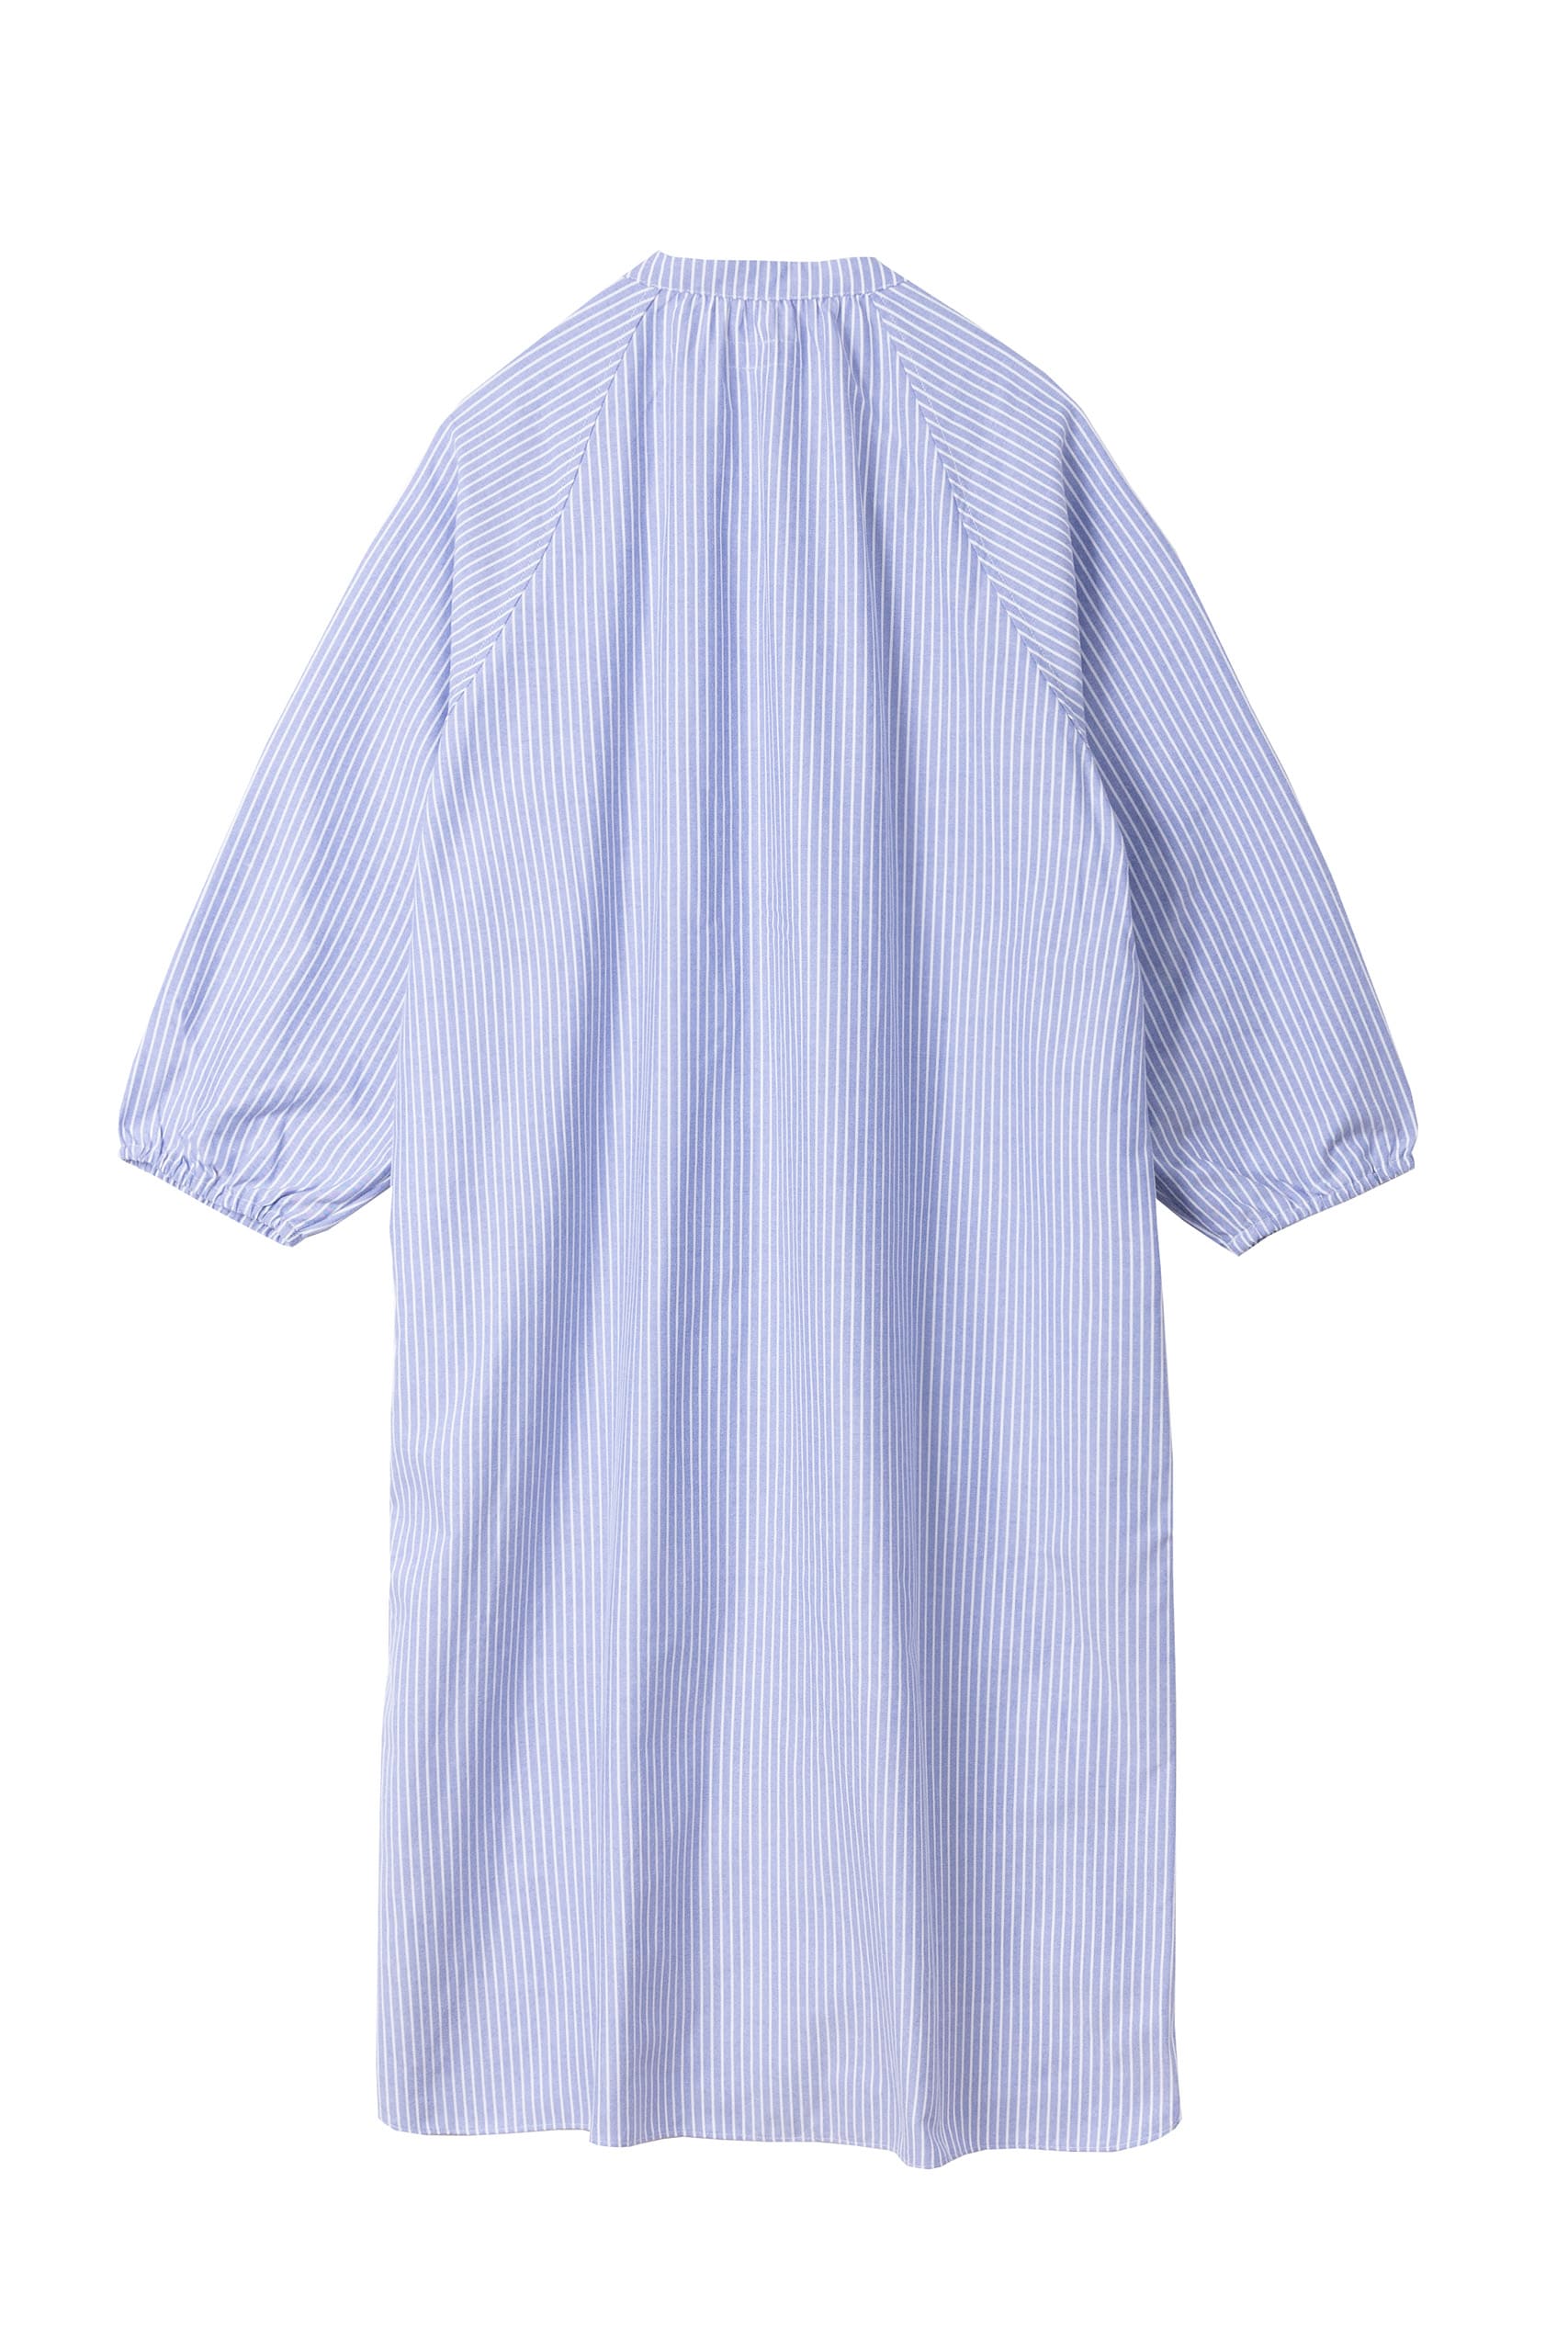 【P01】ストライプシャツパジャマ